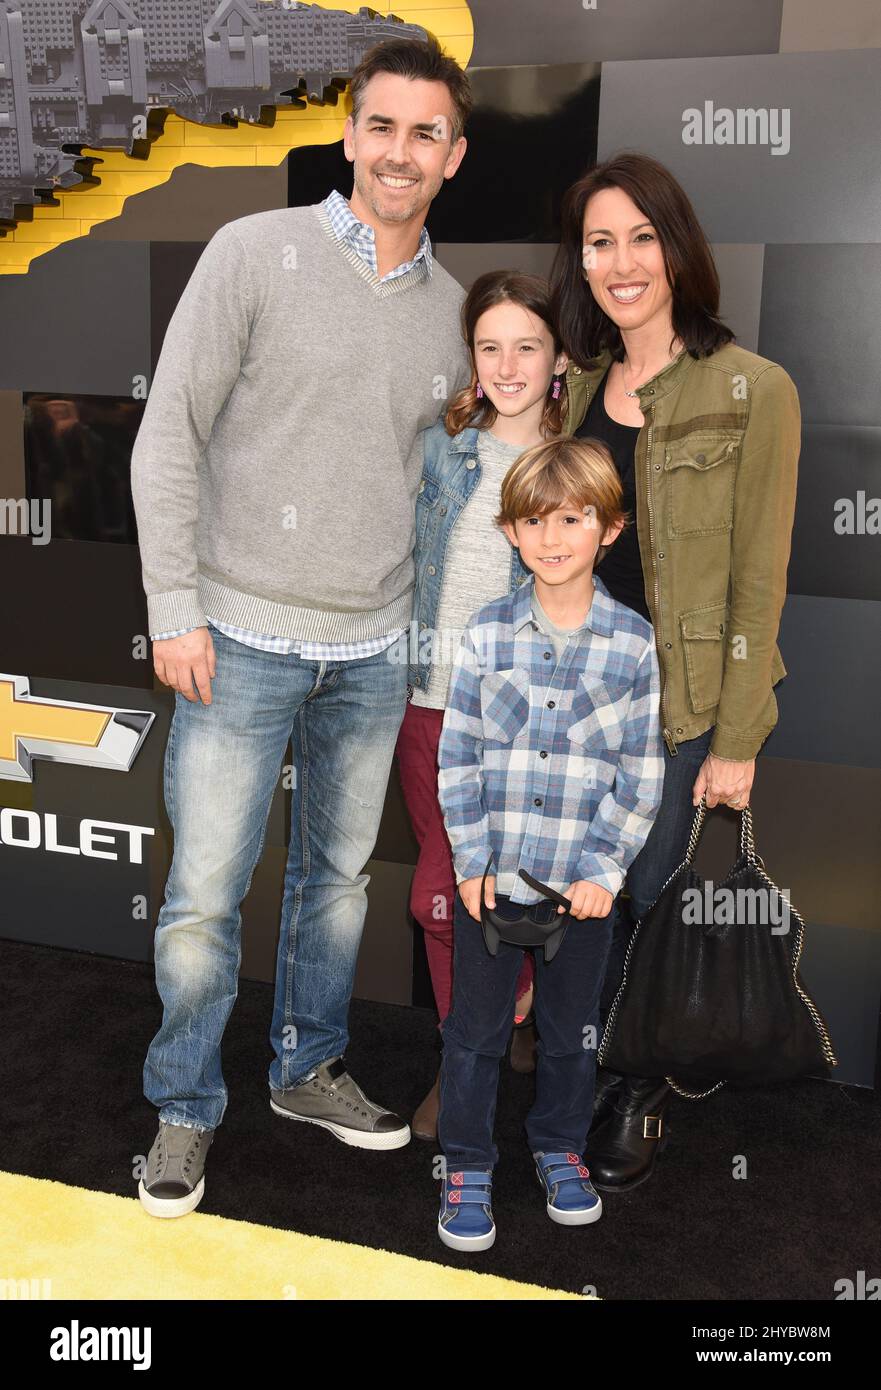 Janet Evans, Bill Willson, Sydney Wilson and Jake Wilson attending the The Lego Batman Movie in Los Angeles Stock Photo